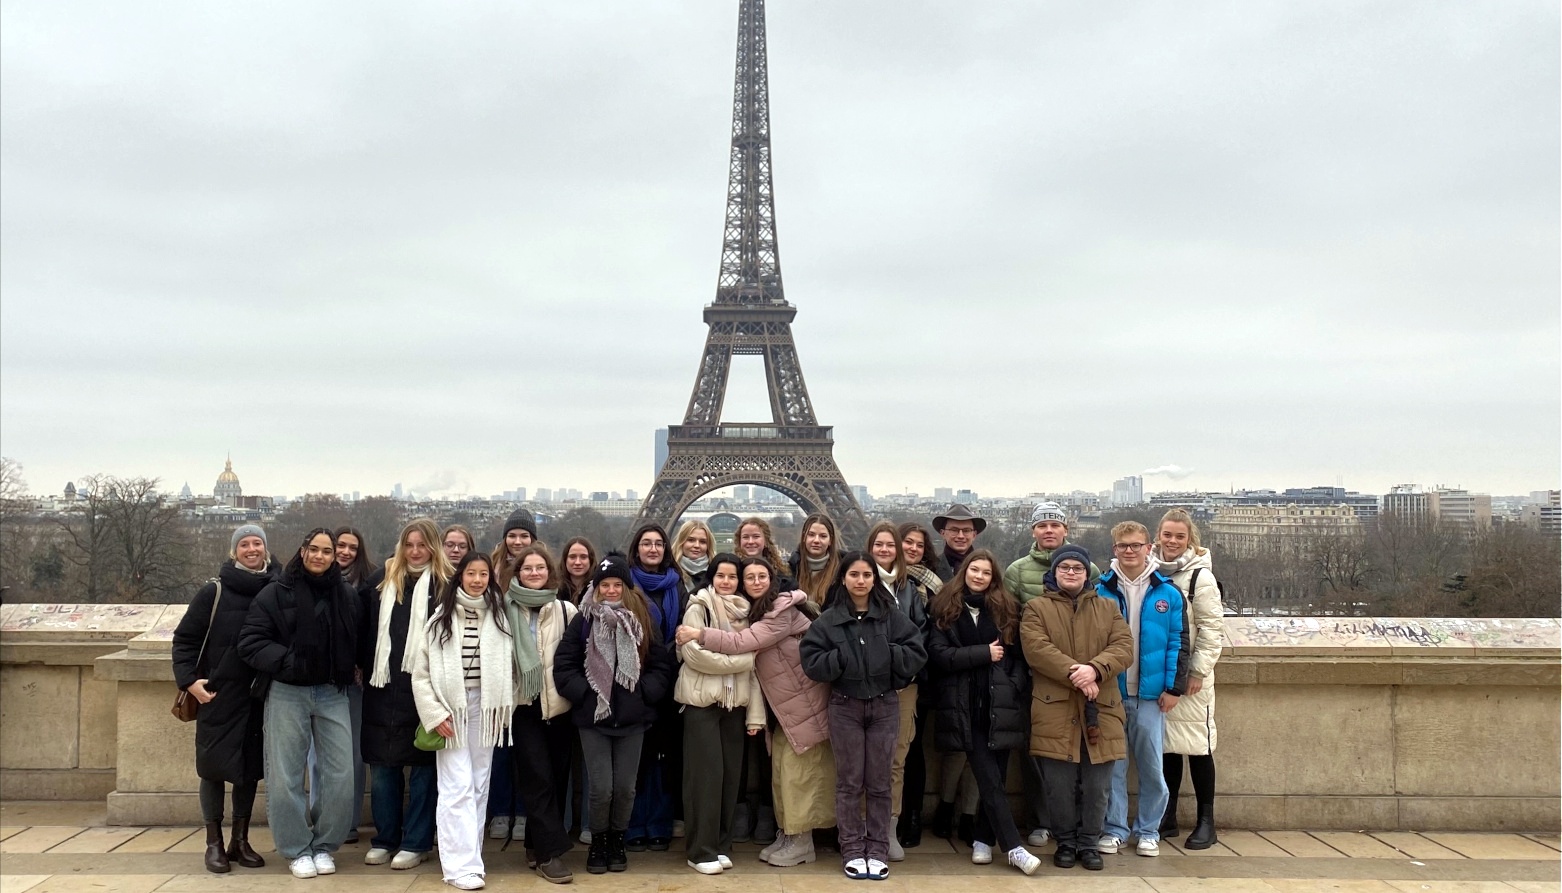 Gruppenbild vor Eiffelturm